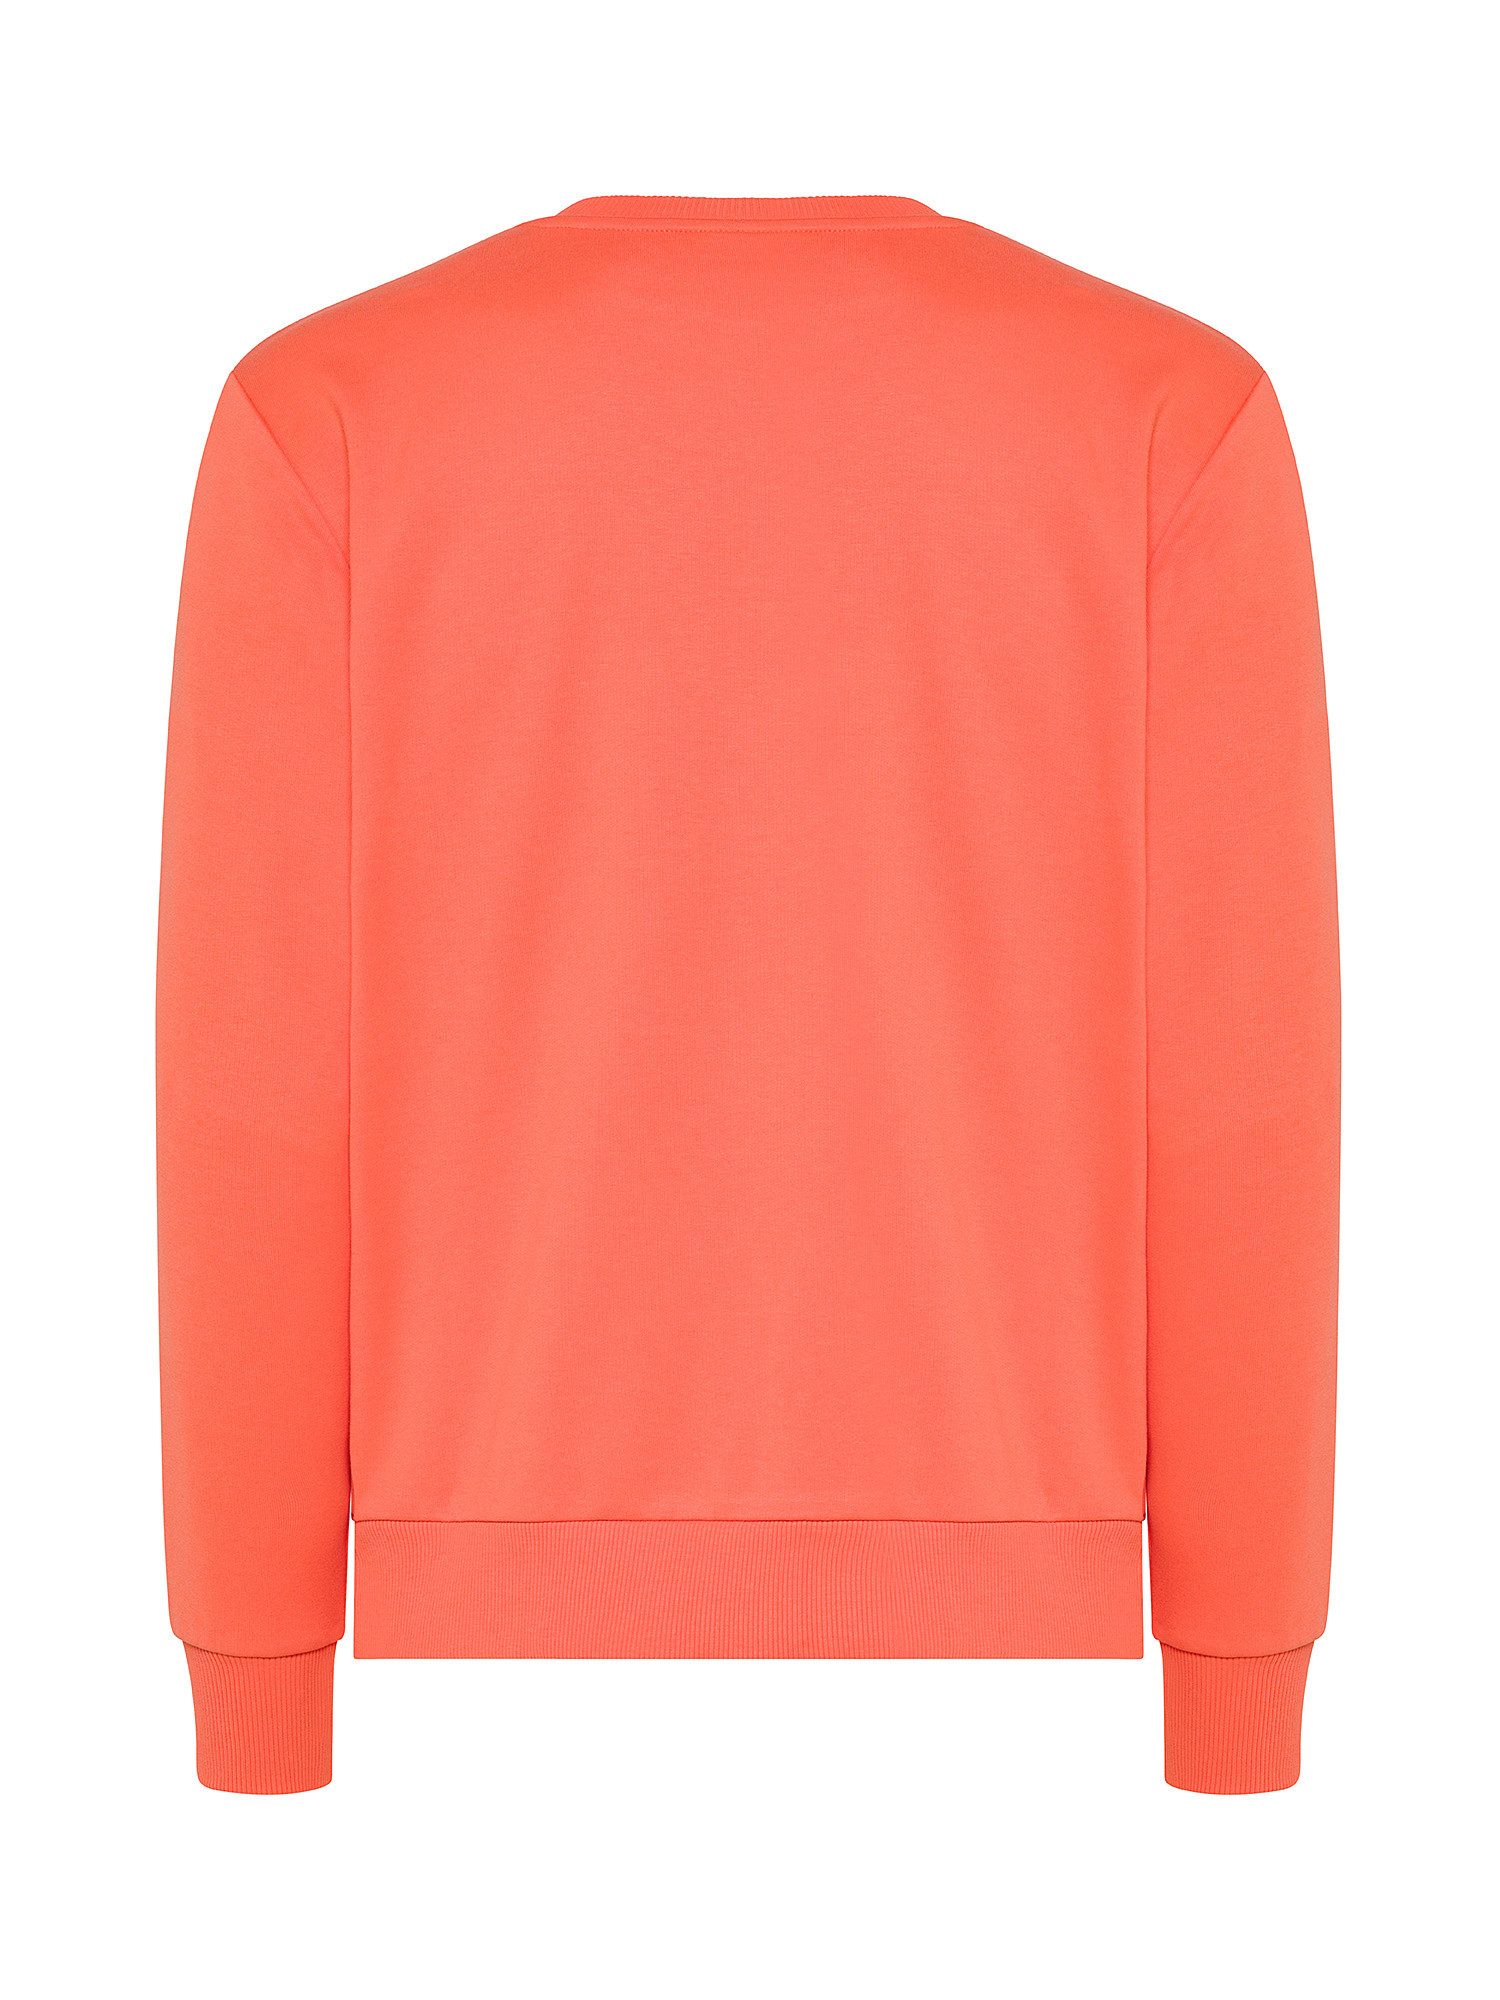 Colmar - Crewneck sweatshirt with one-color print, Orange, large image number 1